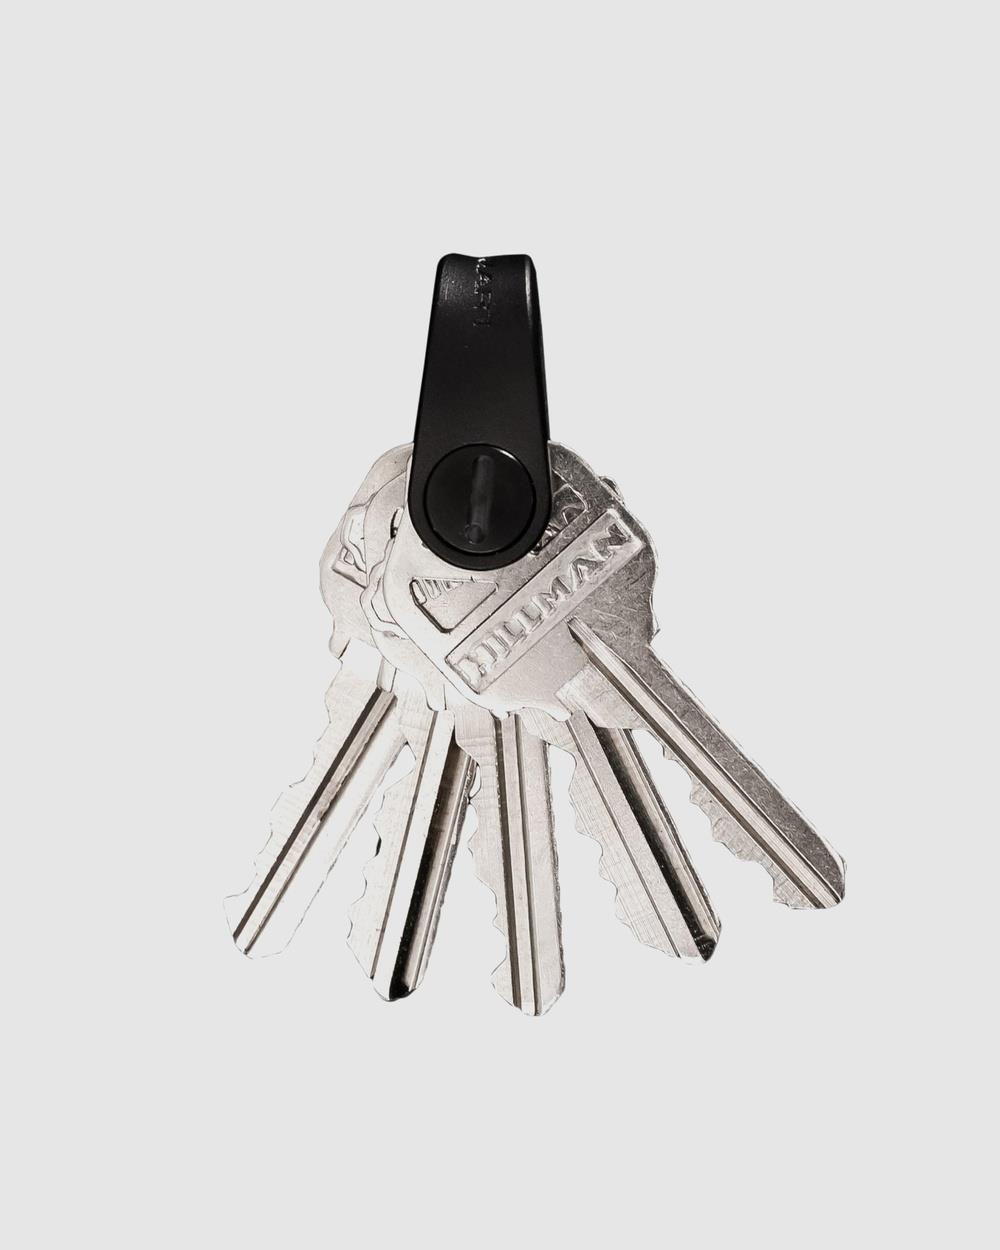 KeySmart - KeySmart Mini Compact Minimalist Expandable Key Holder (Up to 5 Keys) Black - Key Rings (N/A) KeySmart Mini - Compact Minimalist Expandable Key Holder (Up to 5 Keys) - Black